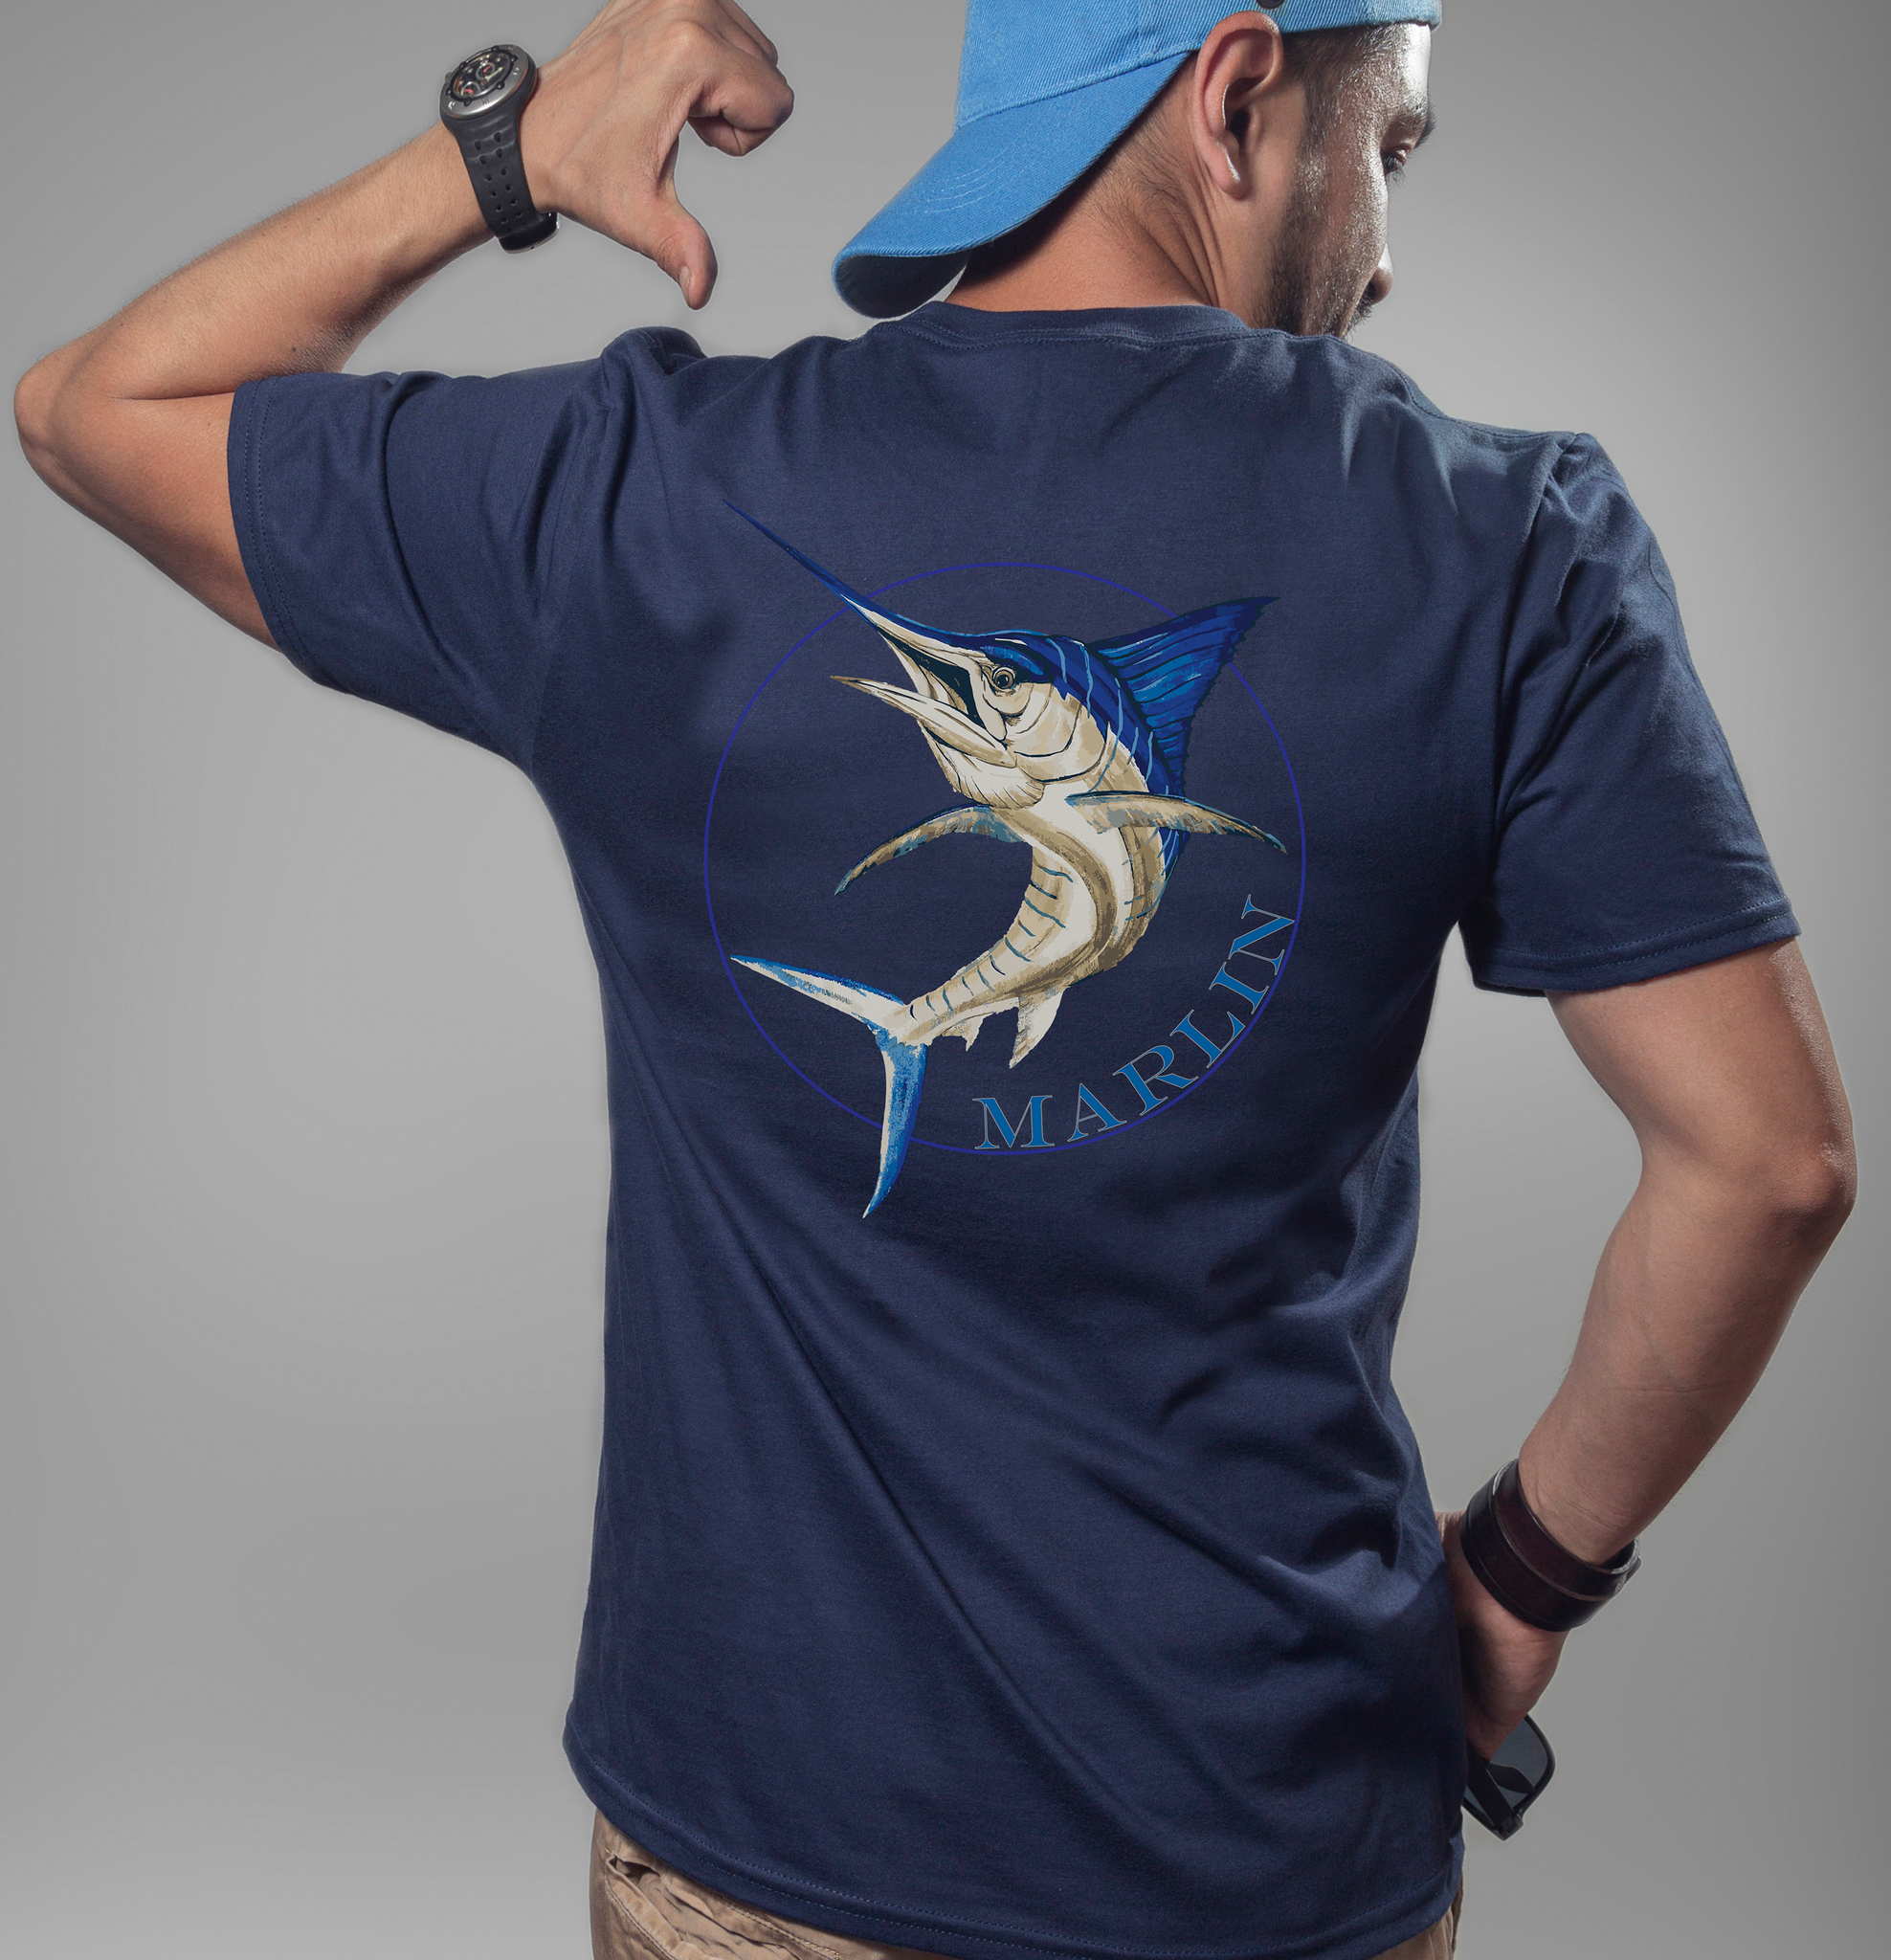 Marlin Fish Men's T- Shirt, Men's Fish Shirt, Fish Shirt, Marlin